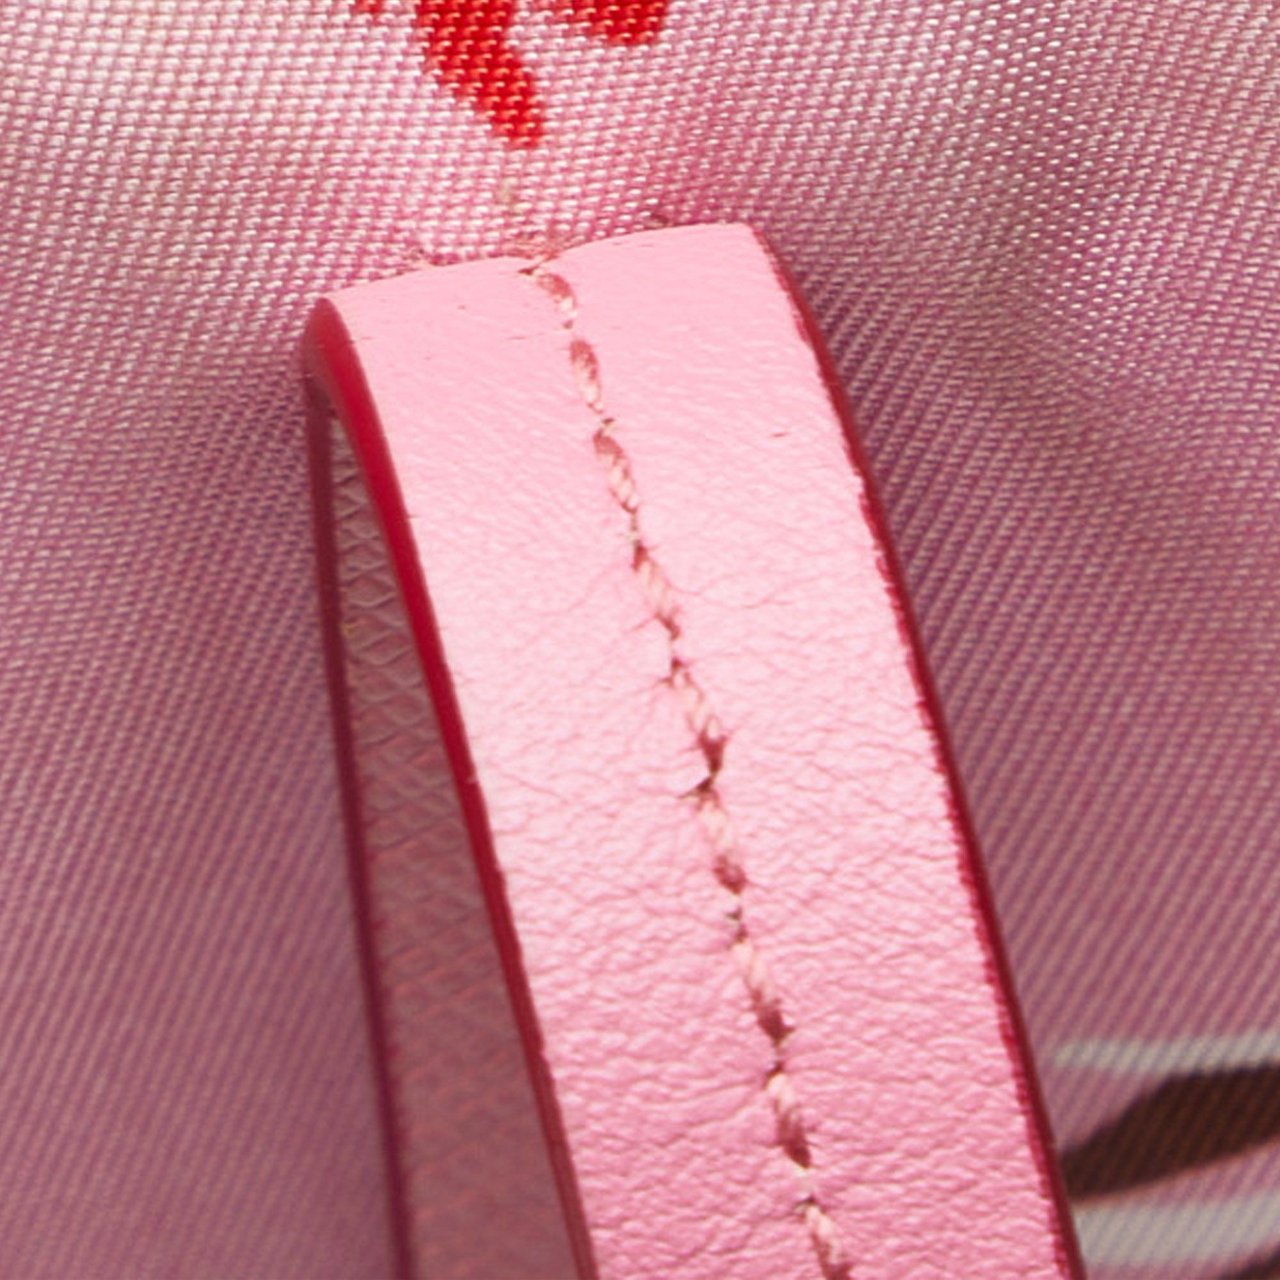 Prada Tessuto Stampato Floral Tote Bag Roze